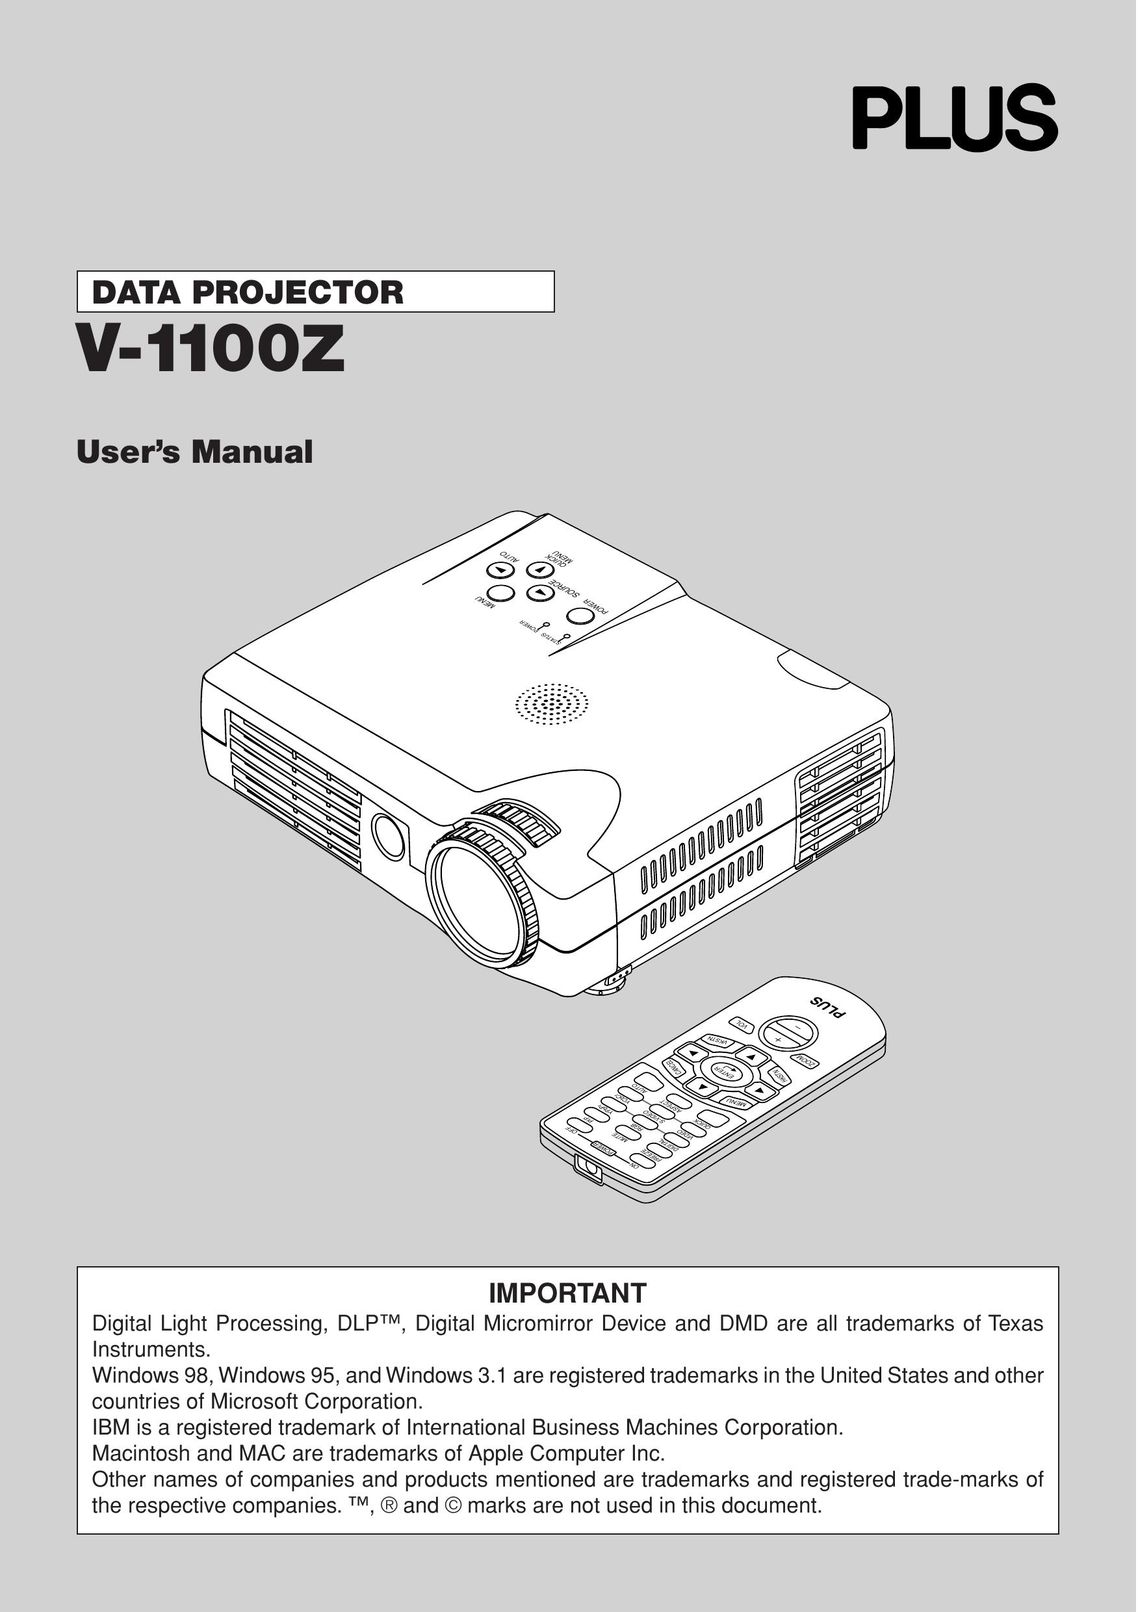 PLUS Vision V-1100Z Projector User Manual